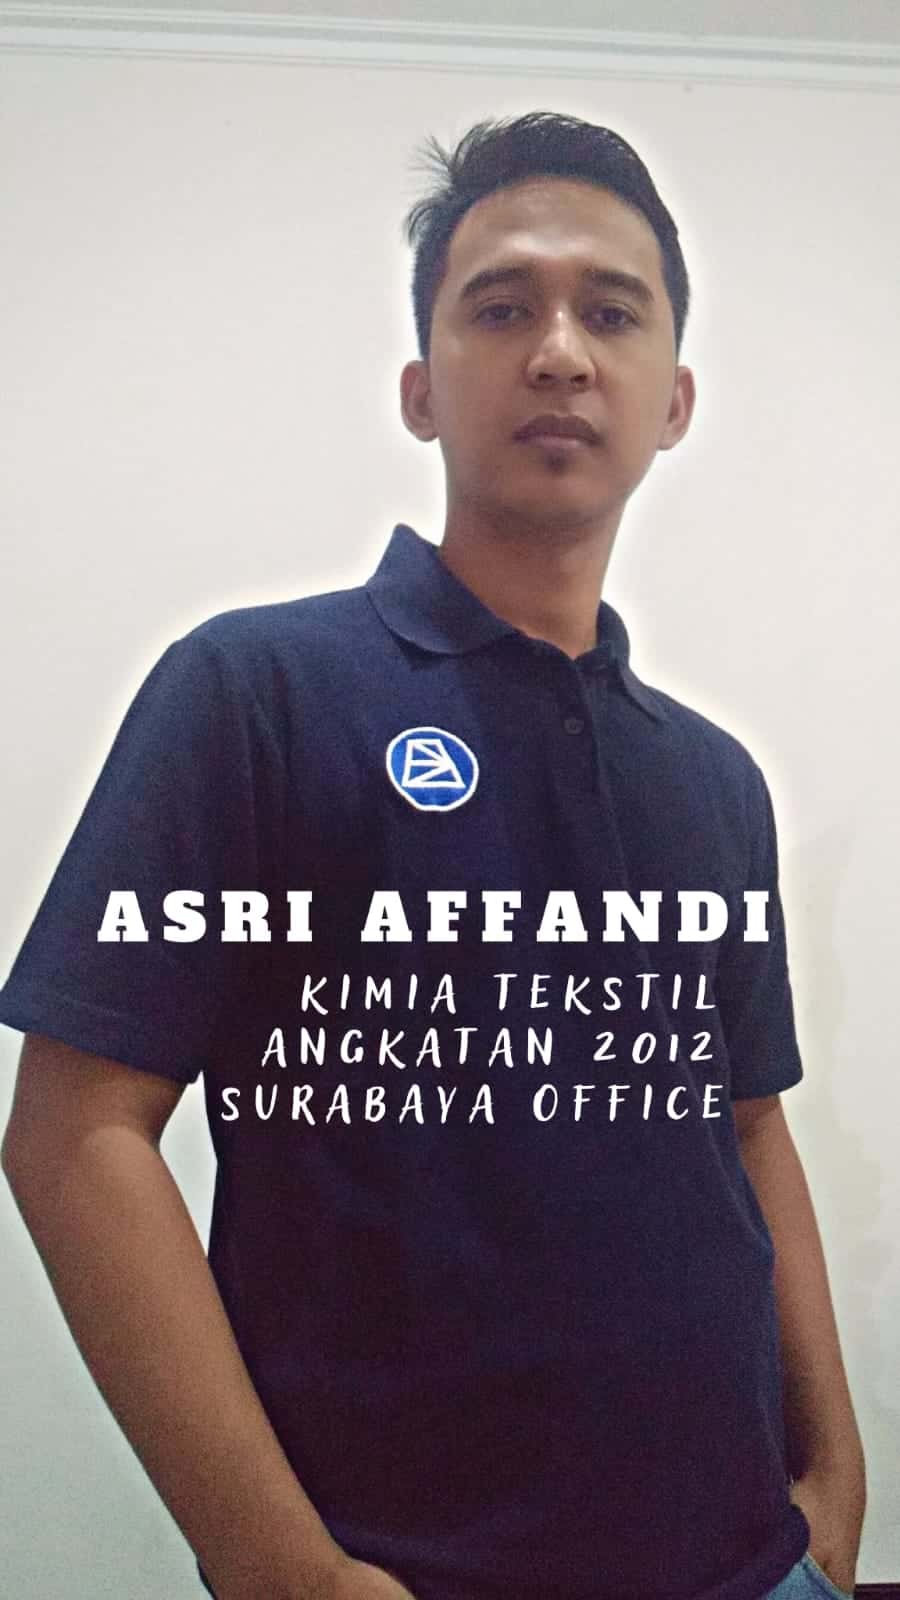 Asri Affandi, Kimia Tekstil Angkatan 2012, Surabaya Office